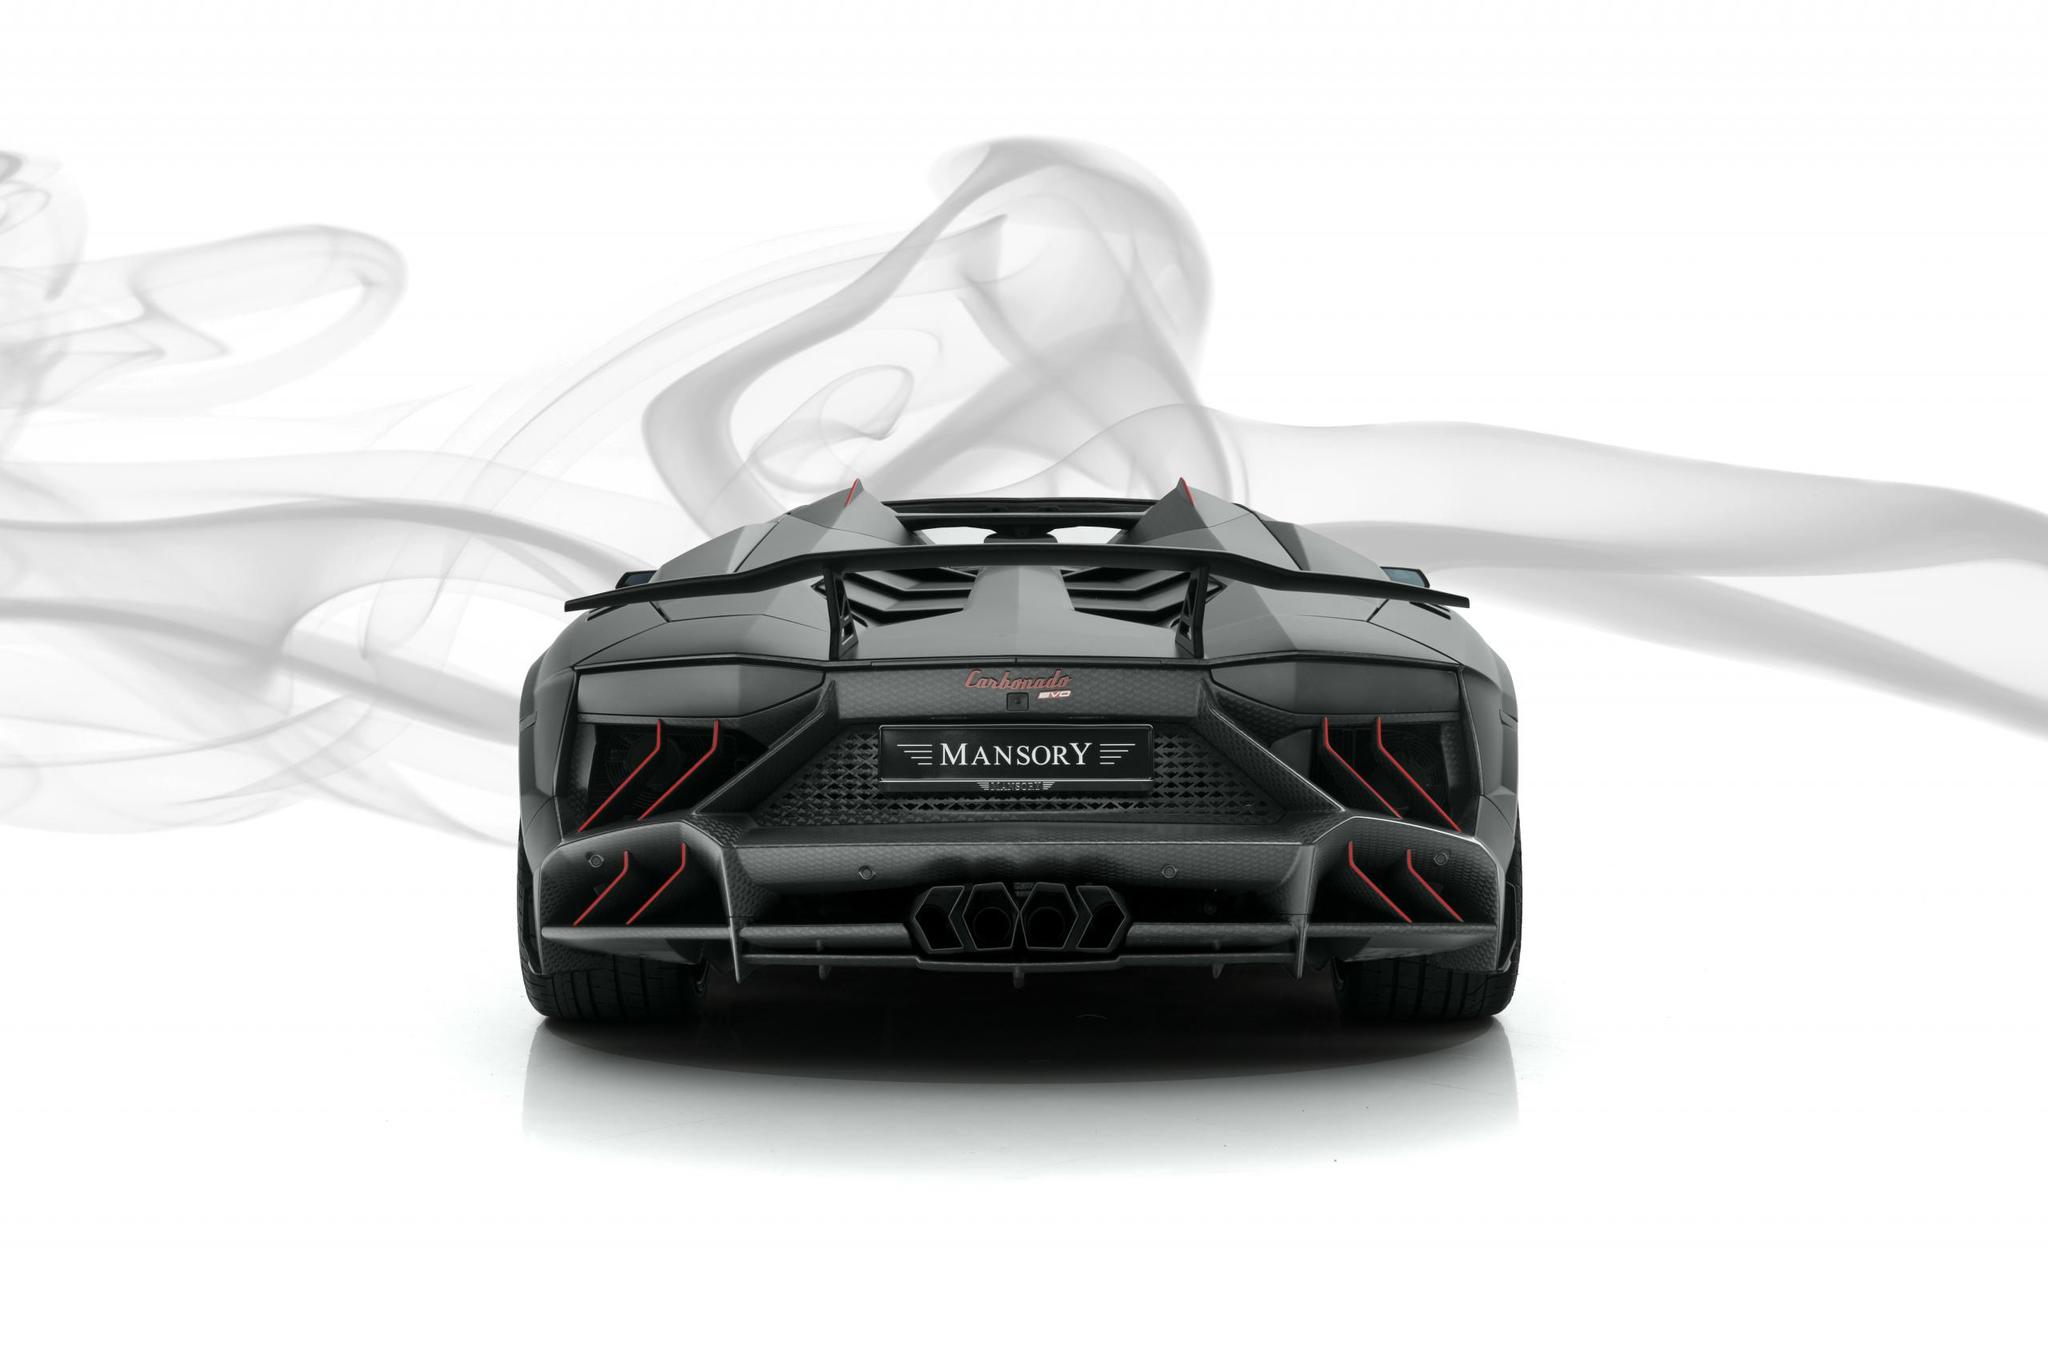 Mansory body kit for Lamborghini Aventador Carbonado new model